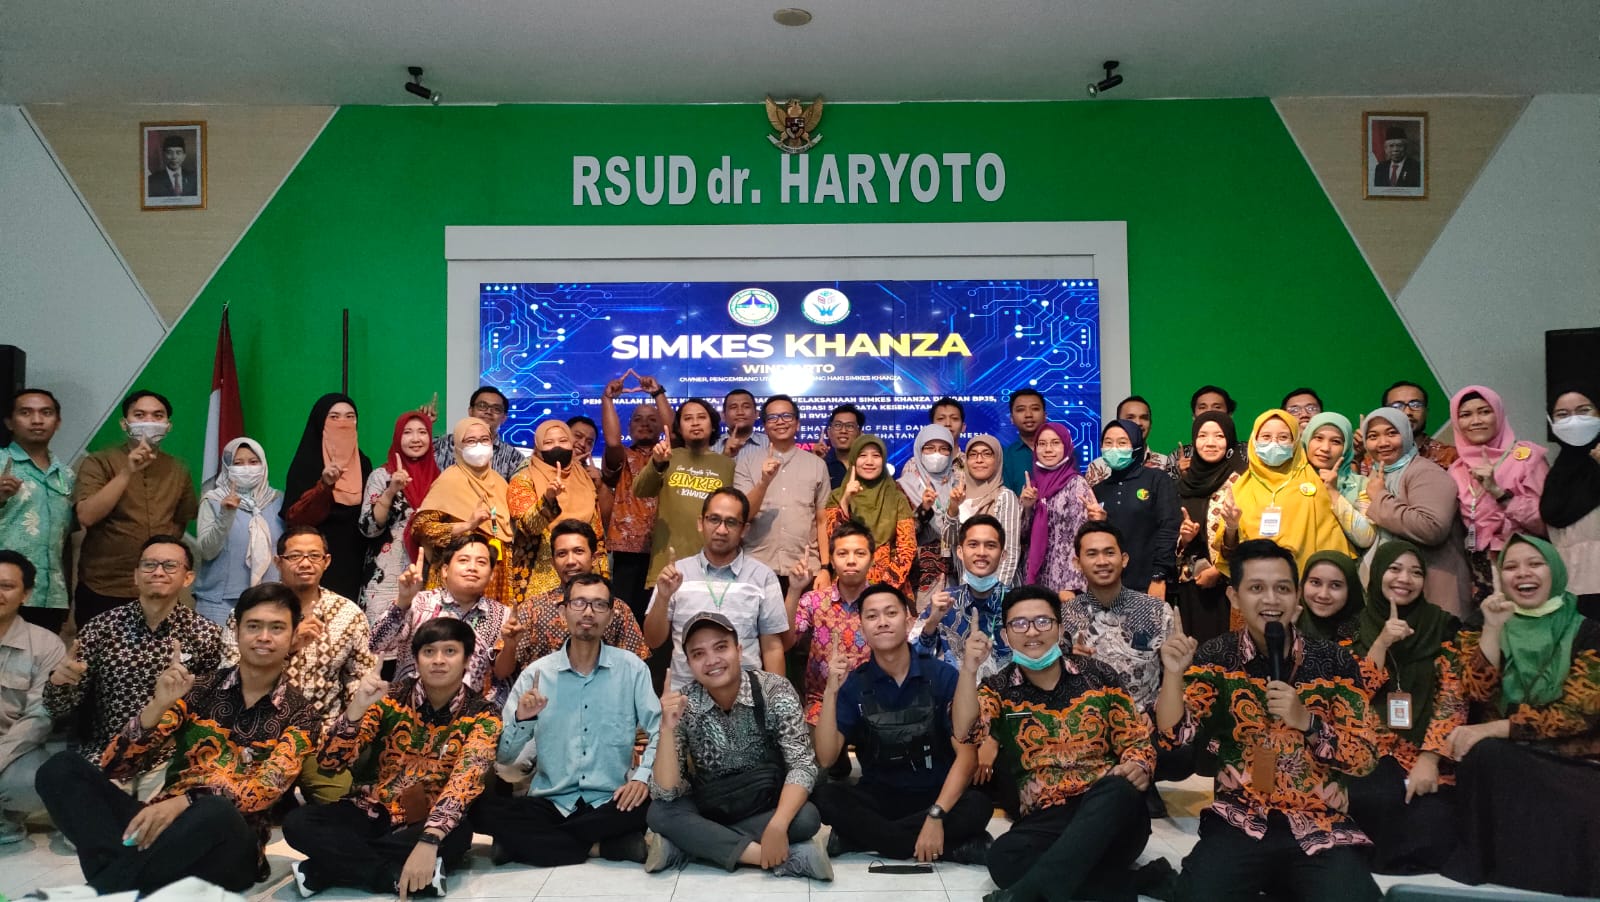 RSUD dr.Haryoto Lumajang Gelar Workshop SIMKES KHANZA, Salah Satu Upaya Peningkatan Pelayanan di Era Digitalisasi